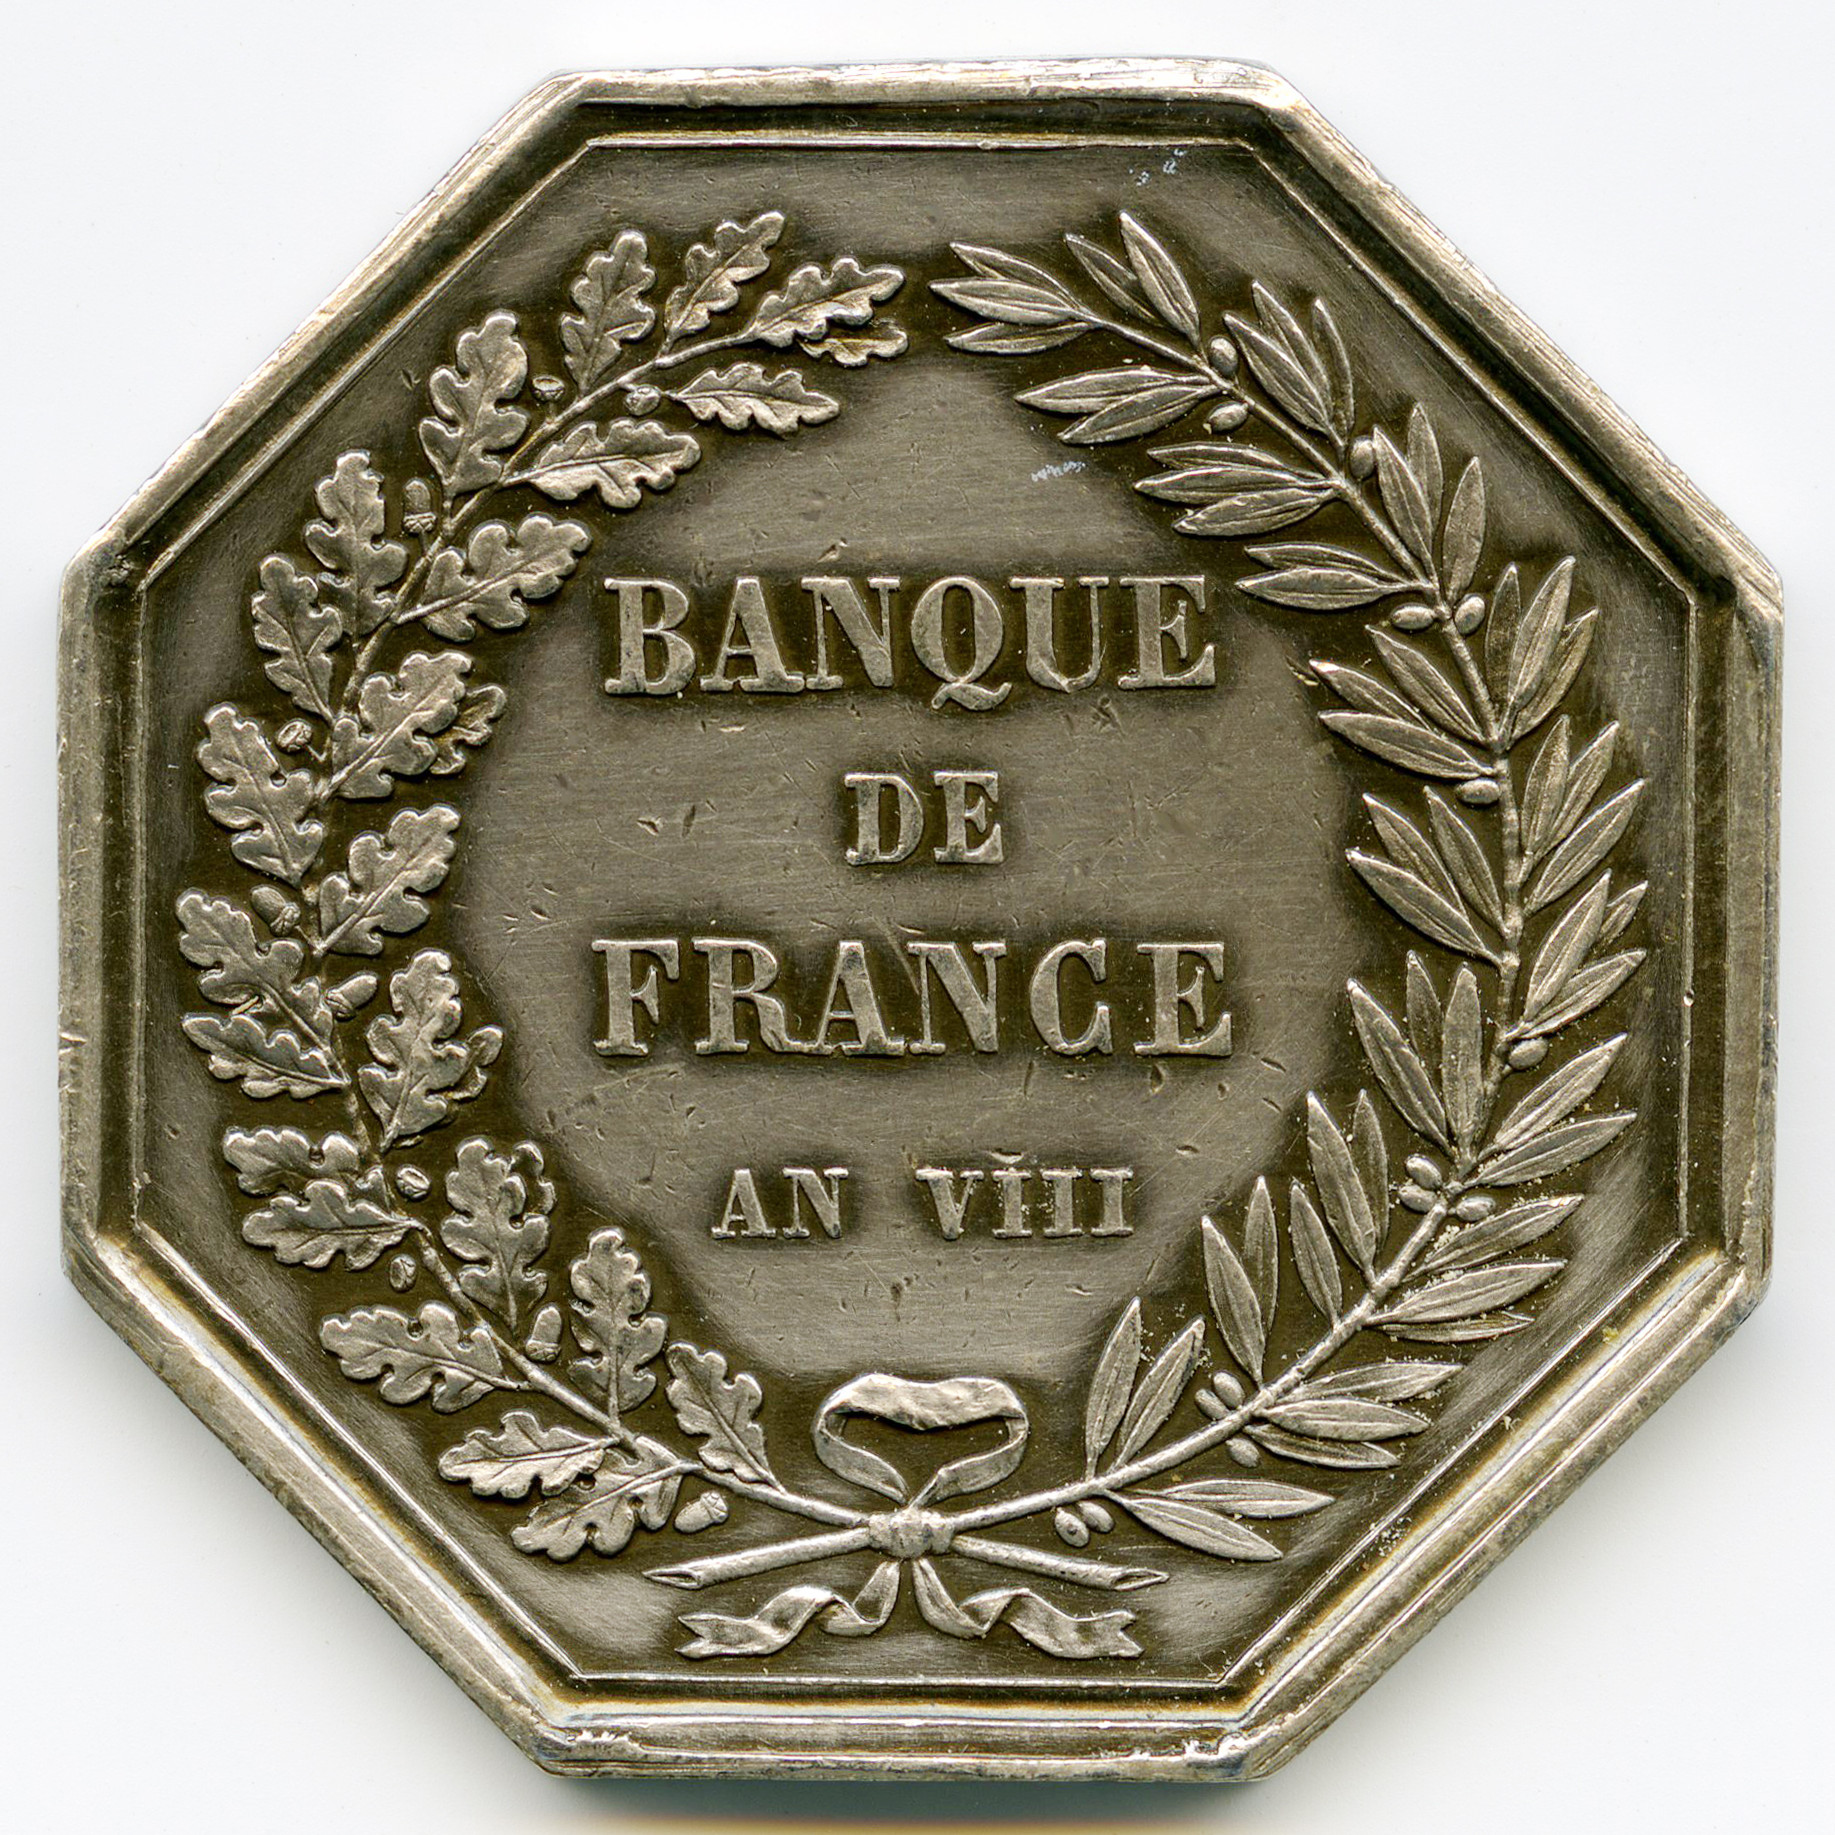 Banque de France - An VIII revers